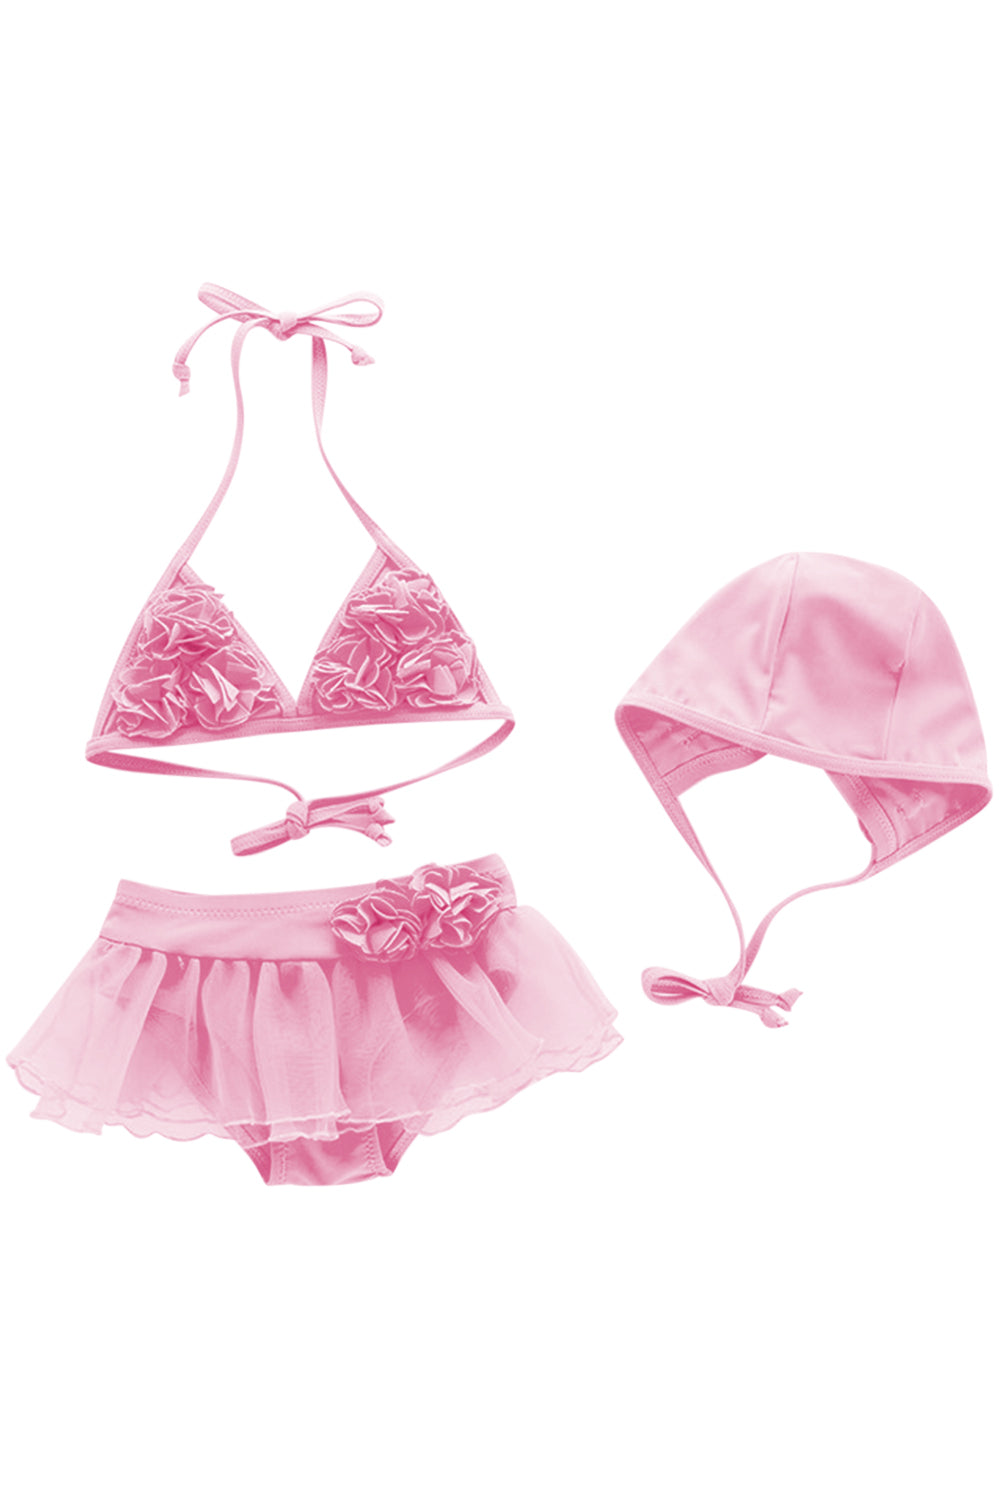 Iyasson Sweet 3D blooming flower Triangle Top Baby Girl Bikini Sets